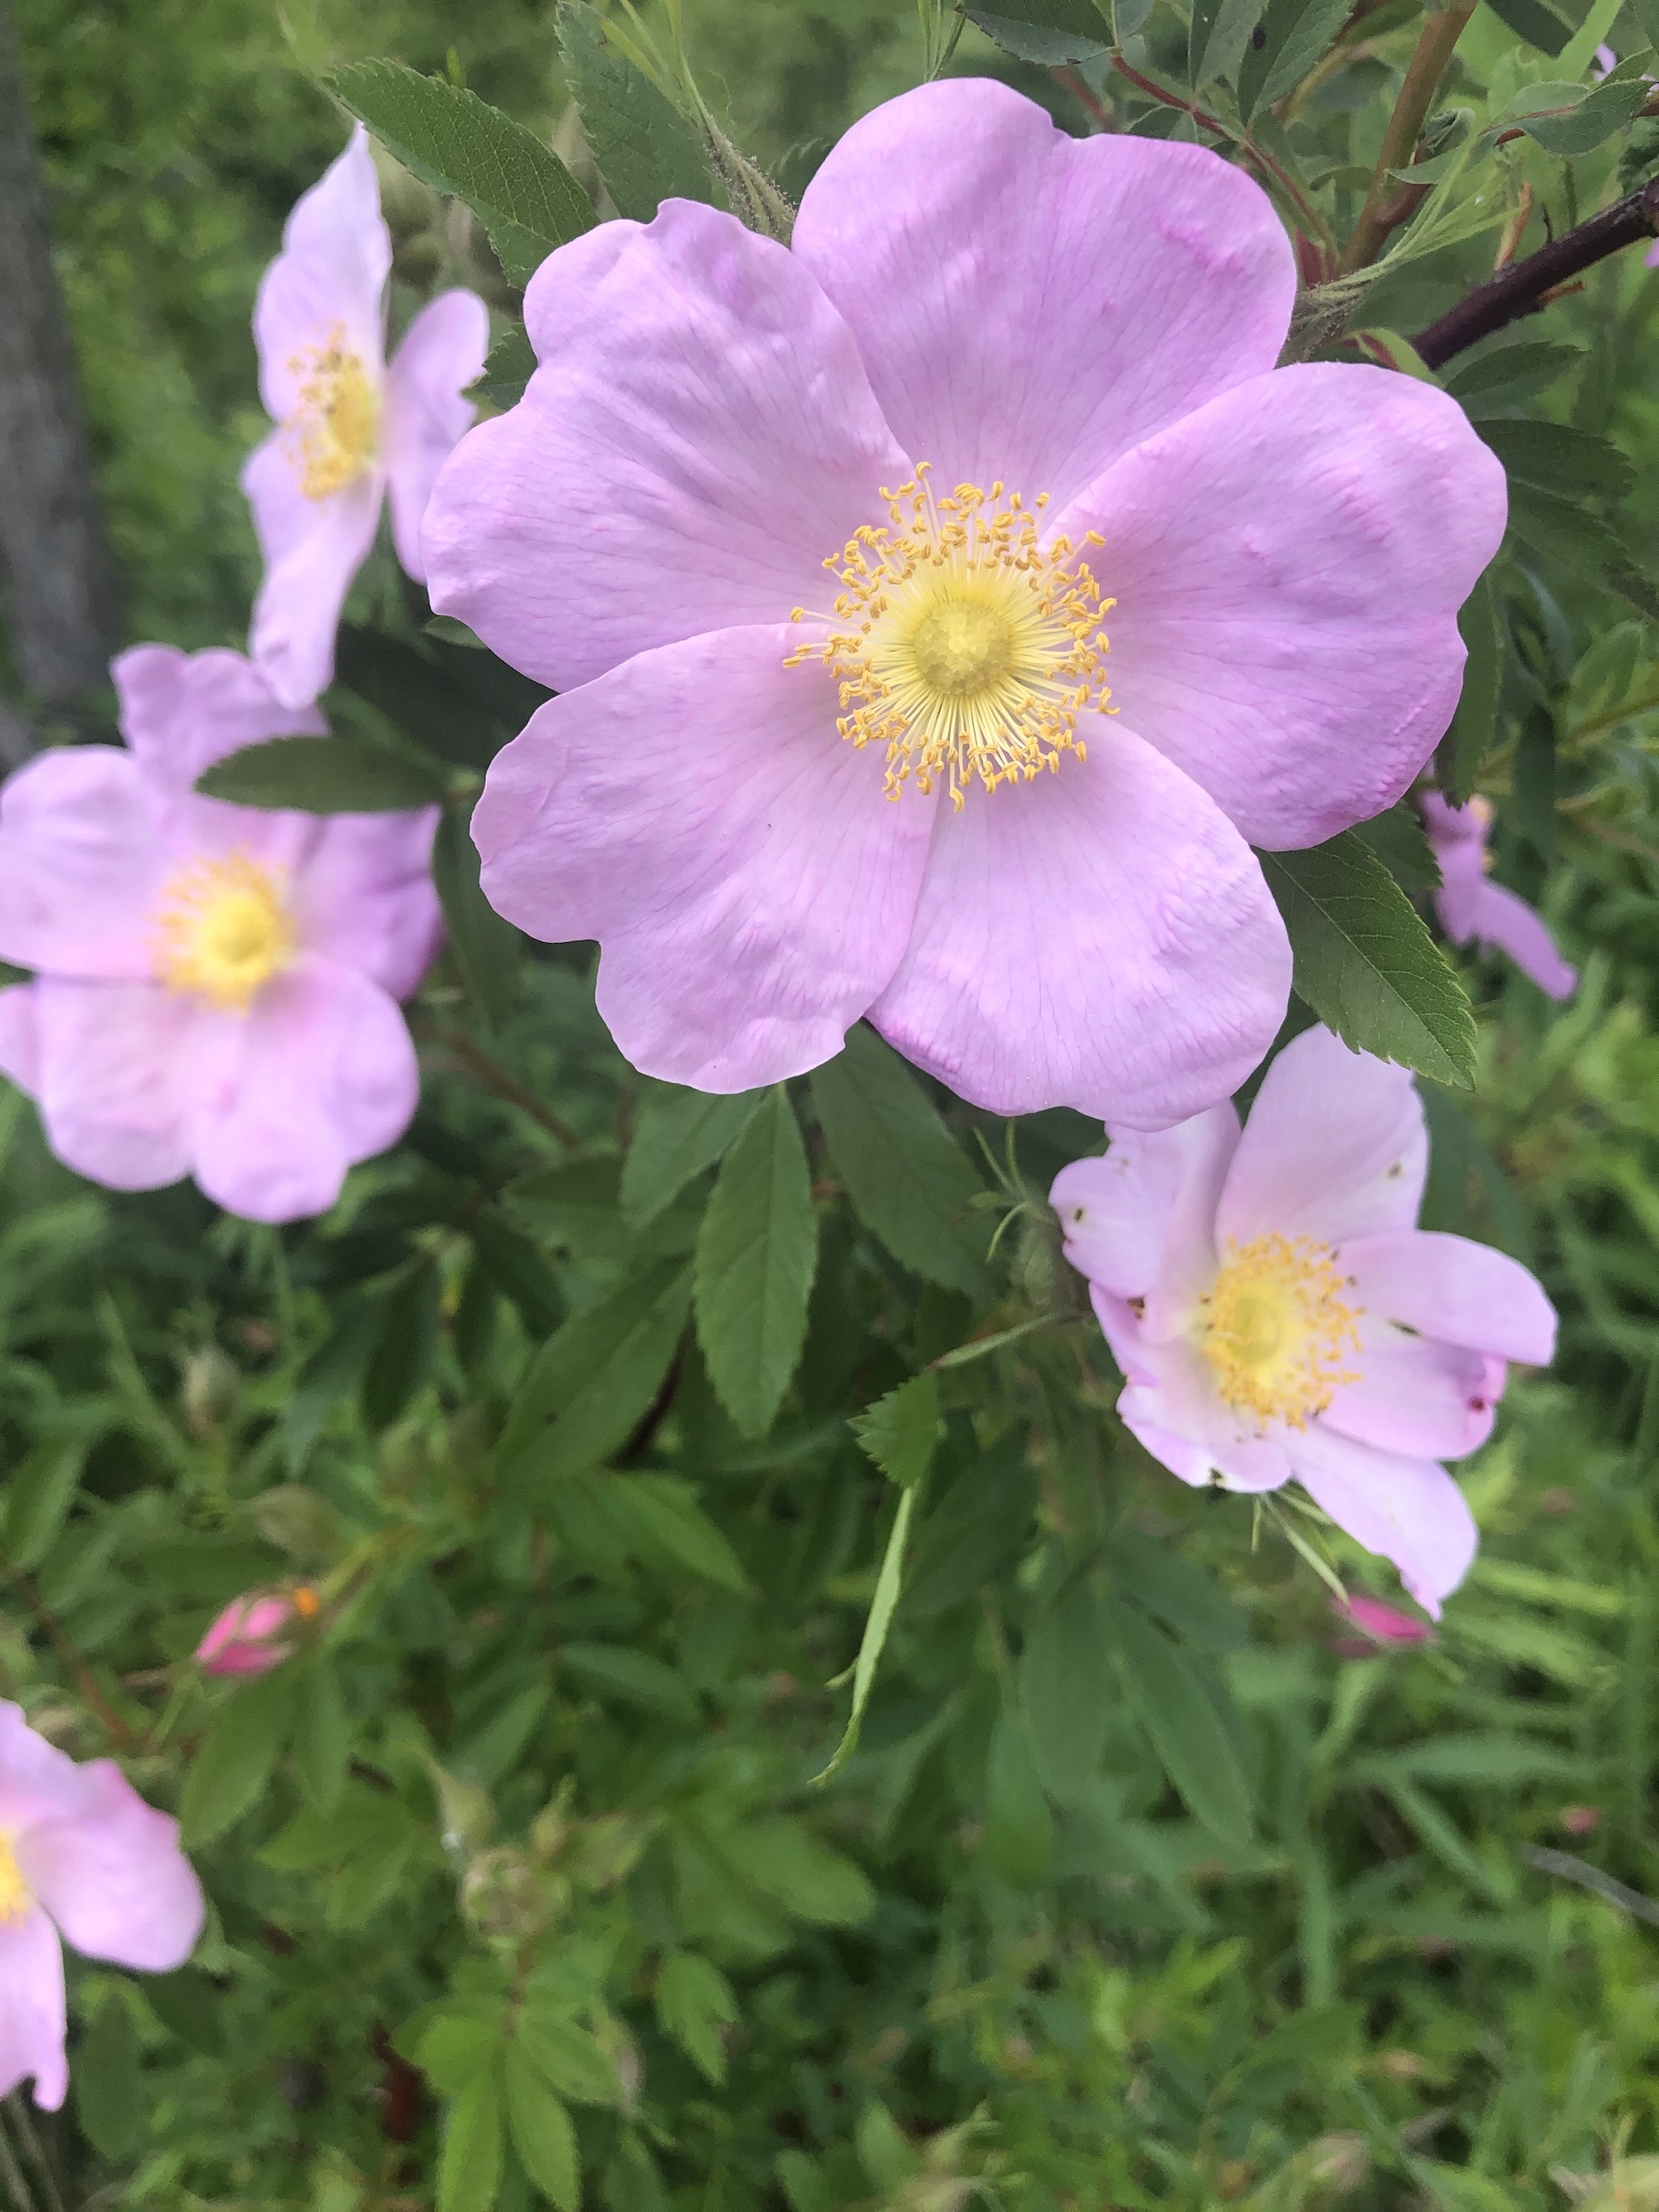 Prairie Rose in UW Arboretum near Longenecker Horticultural Gardens on June 2, 2021.